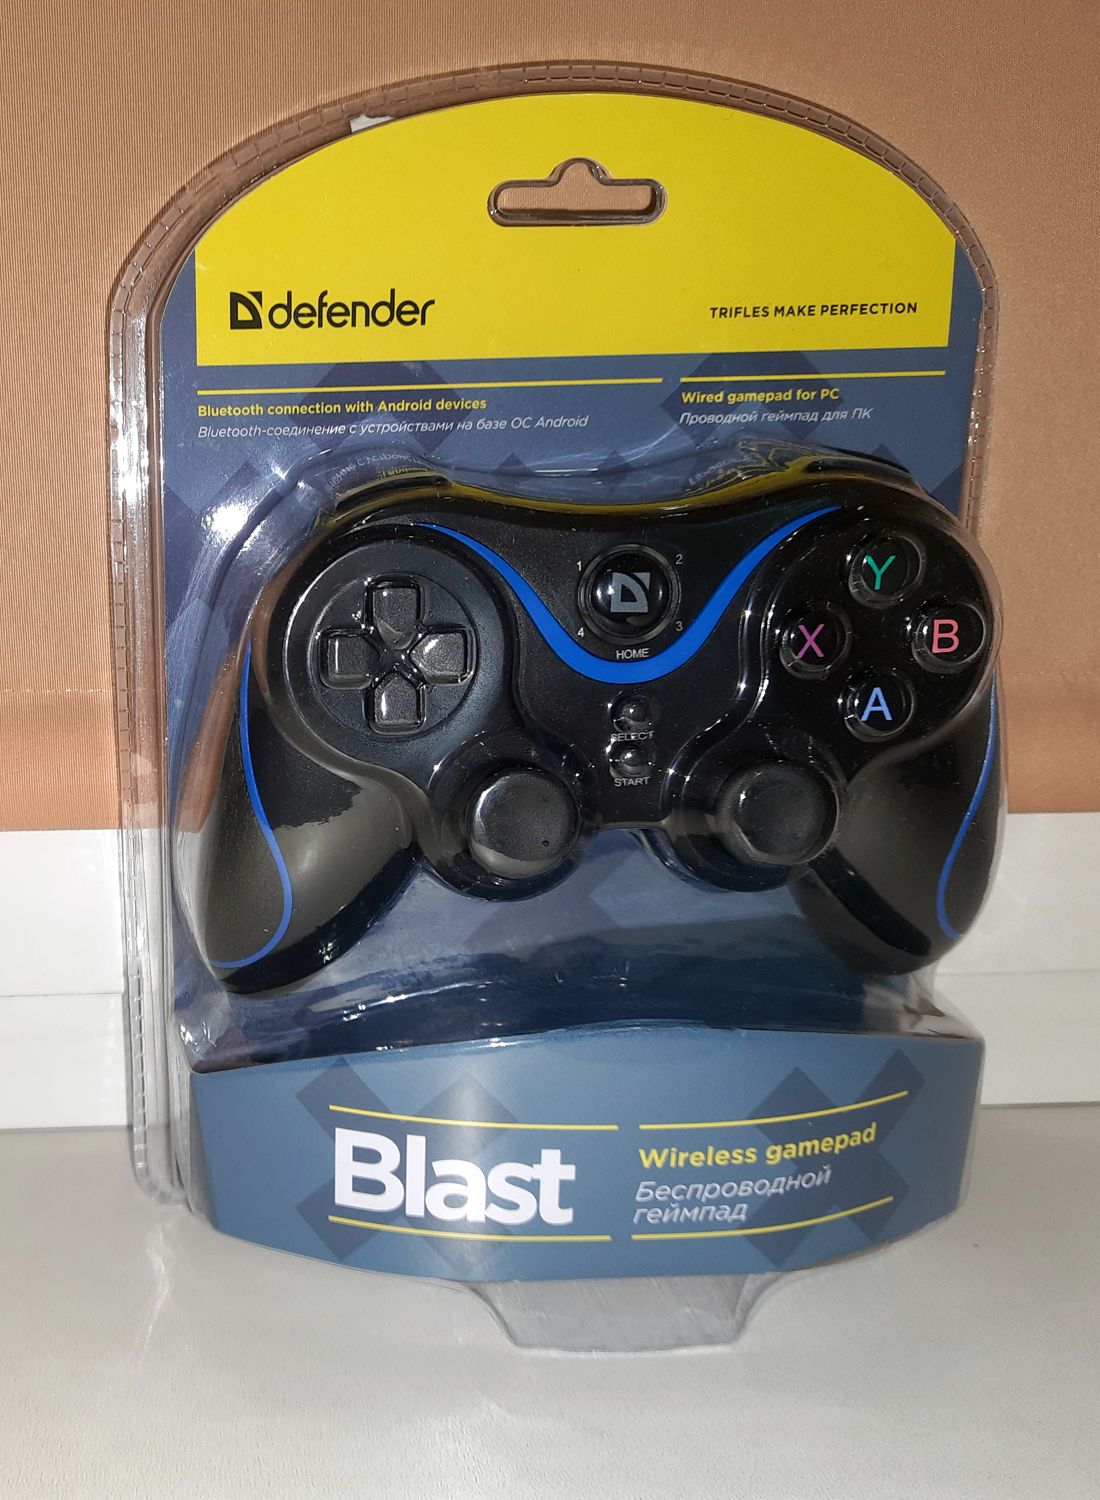 Как подключить defender blast. Геймпад Defender 64285. Беспроводной геймпад Defender Blast. Defender Blast (64285) Wireless Gamepad. Defender Blast USB, Bluetooth, Android, li-ion [64285] {геймпад беспроводной}.